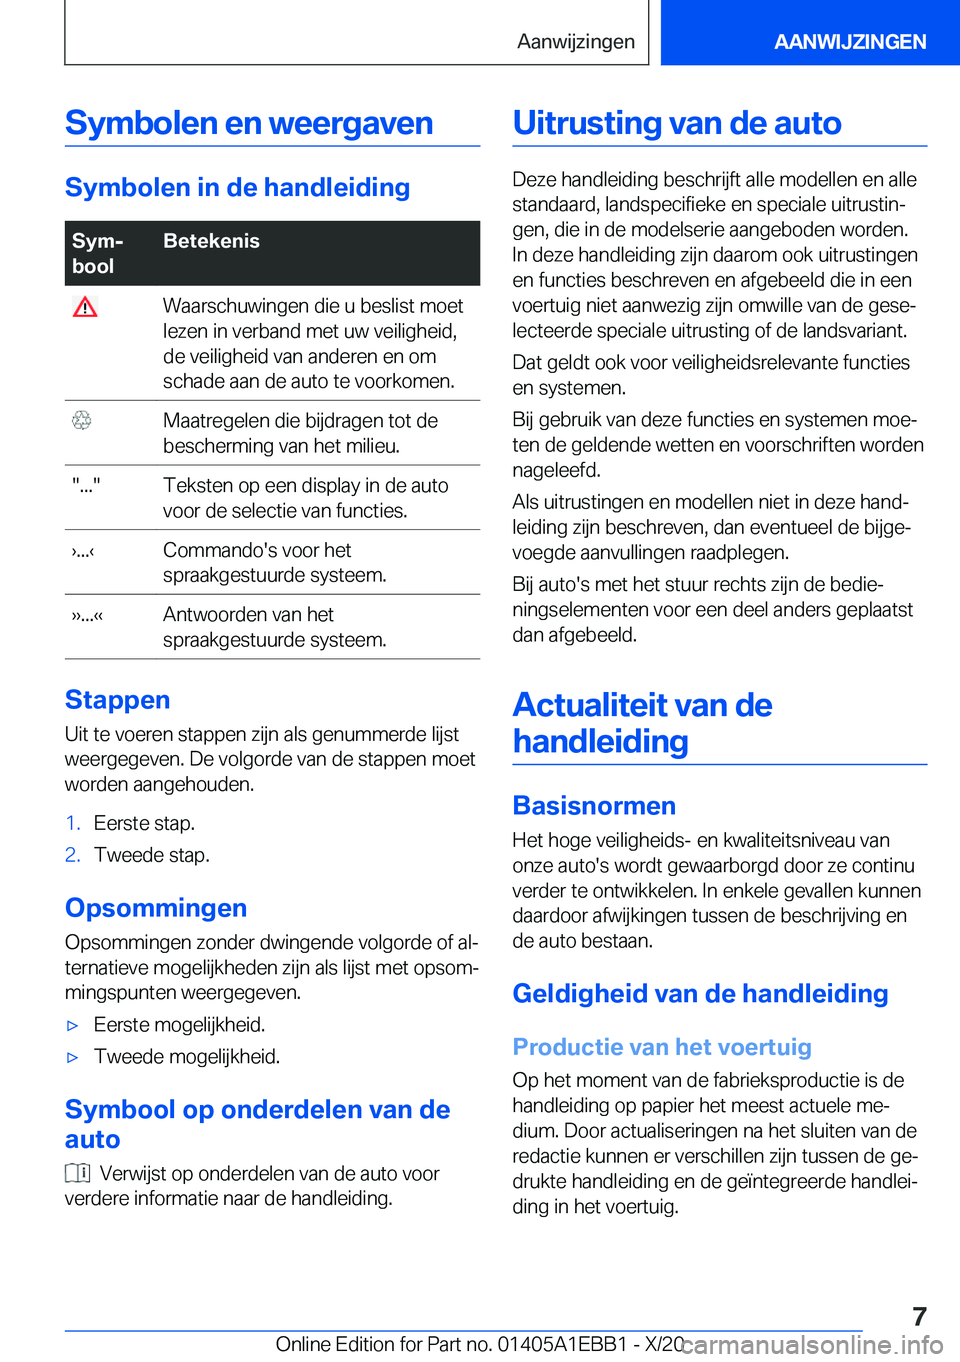 BMW 3 SERIES 2021  Instructieboekjes (in Dutch) �S�y�m�b�o�l�e�n��e�n��w�e�e�r�g�a�v�e�n
�S�y�m�b�o�l�e�n��i�n��d�e��h�a�n�d�l�e�i�d�i�n�g
�S�y�mj
�b�o�o�l�B�e�t�e�k�e�n�i�s��W�a�a�r�s�c�h�u�w�i�n�g�e�n��d�i�e��u��b�e�s�l�i�s�t��m�o�e�t
